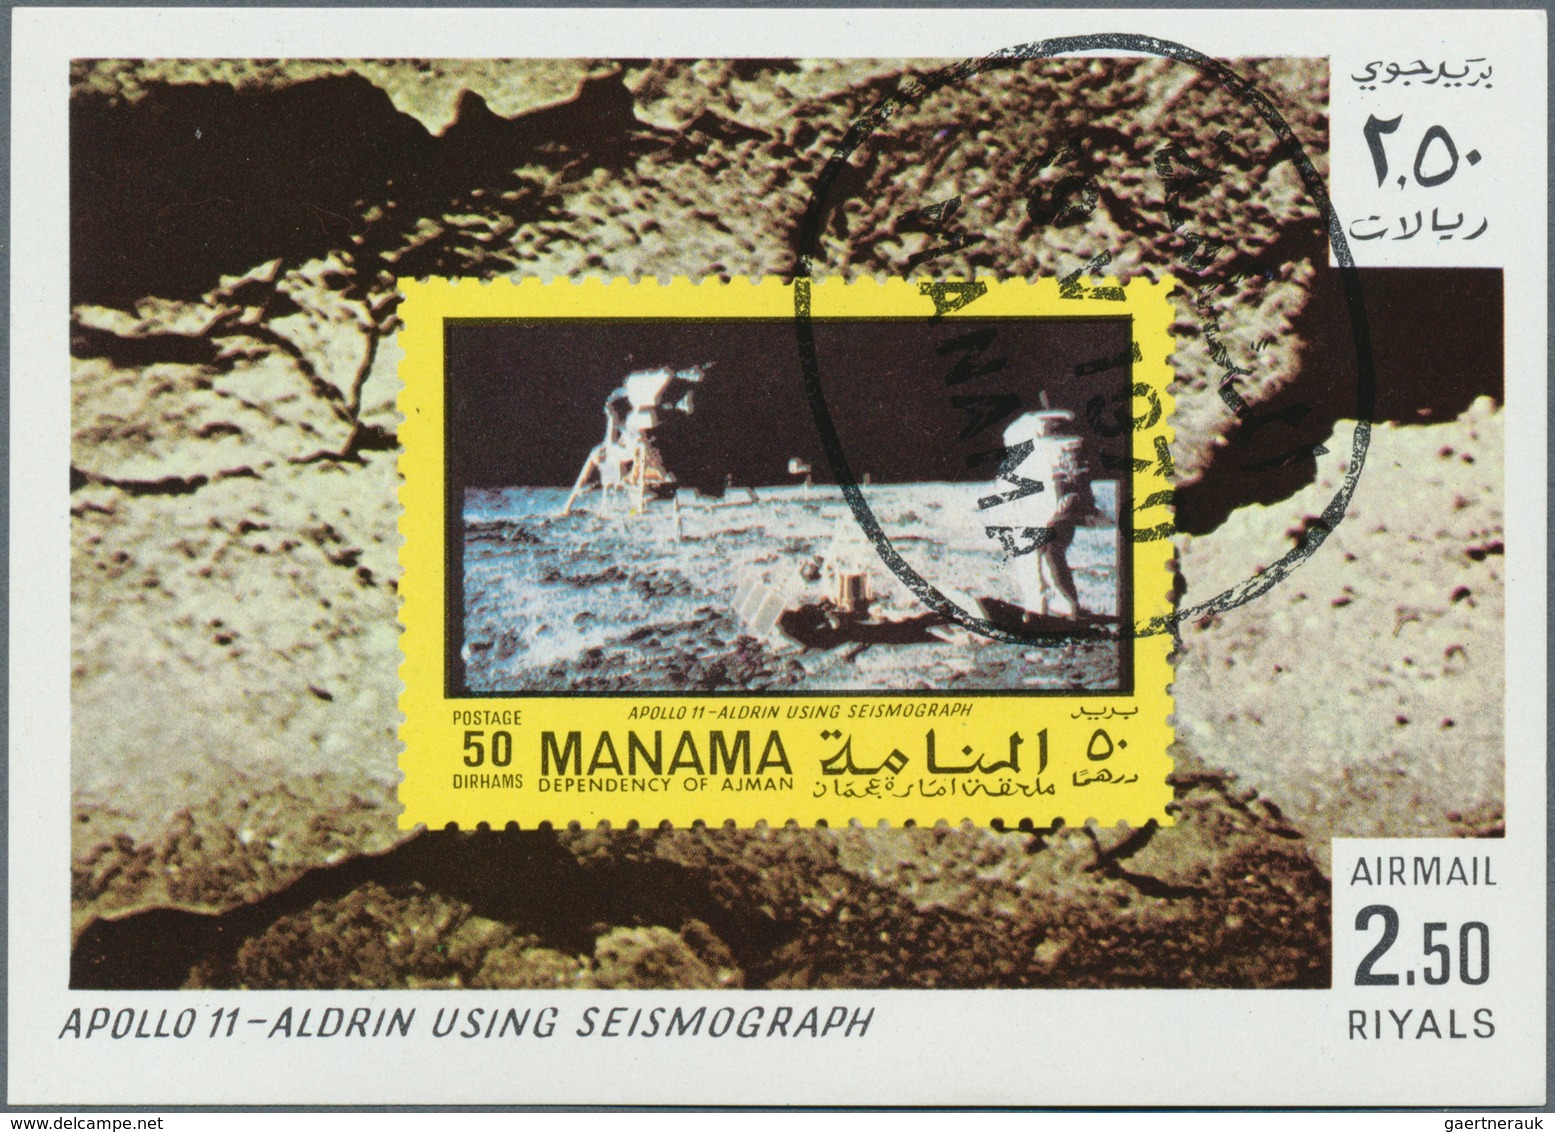 Adschman - Manama / Ajman - Manama: 1970, SPACE RESEARCH 'Apollo moon landing' 15 different imperfor